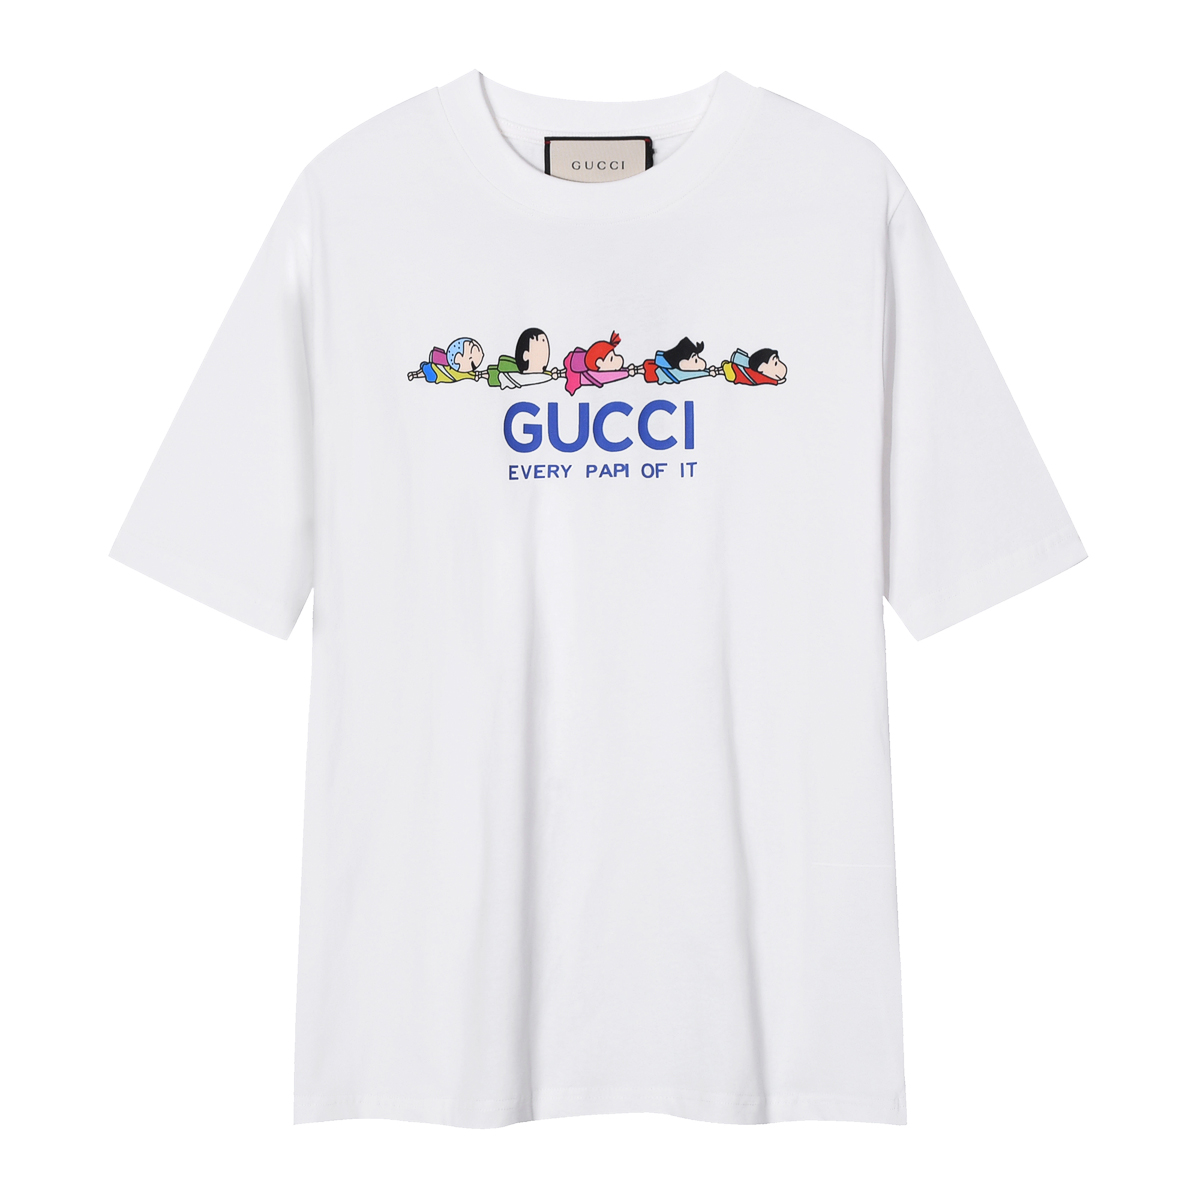 Gucci Clothing T-Shirt Black White Printing Unisex Cotton Fashion Short Sleeve G66916